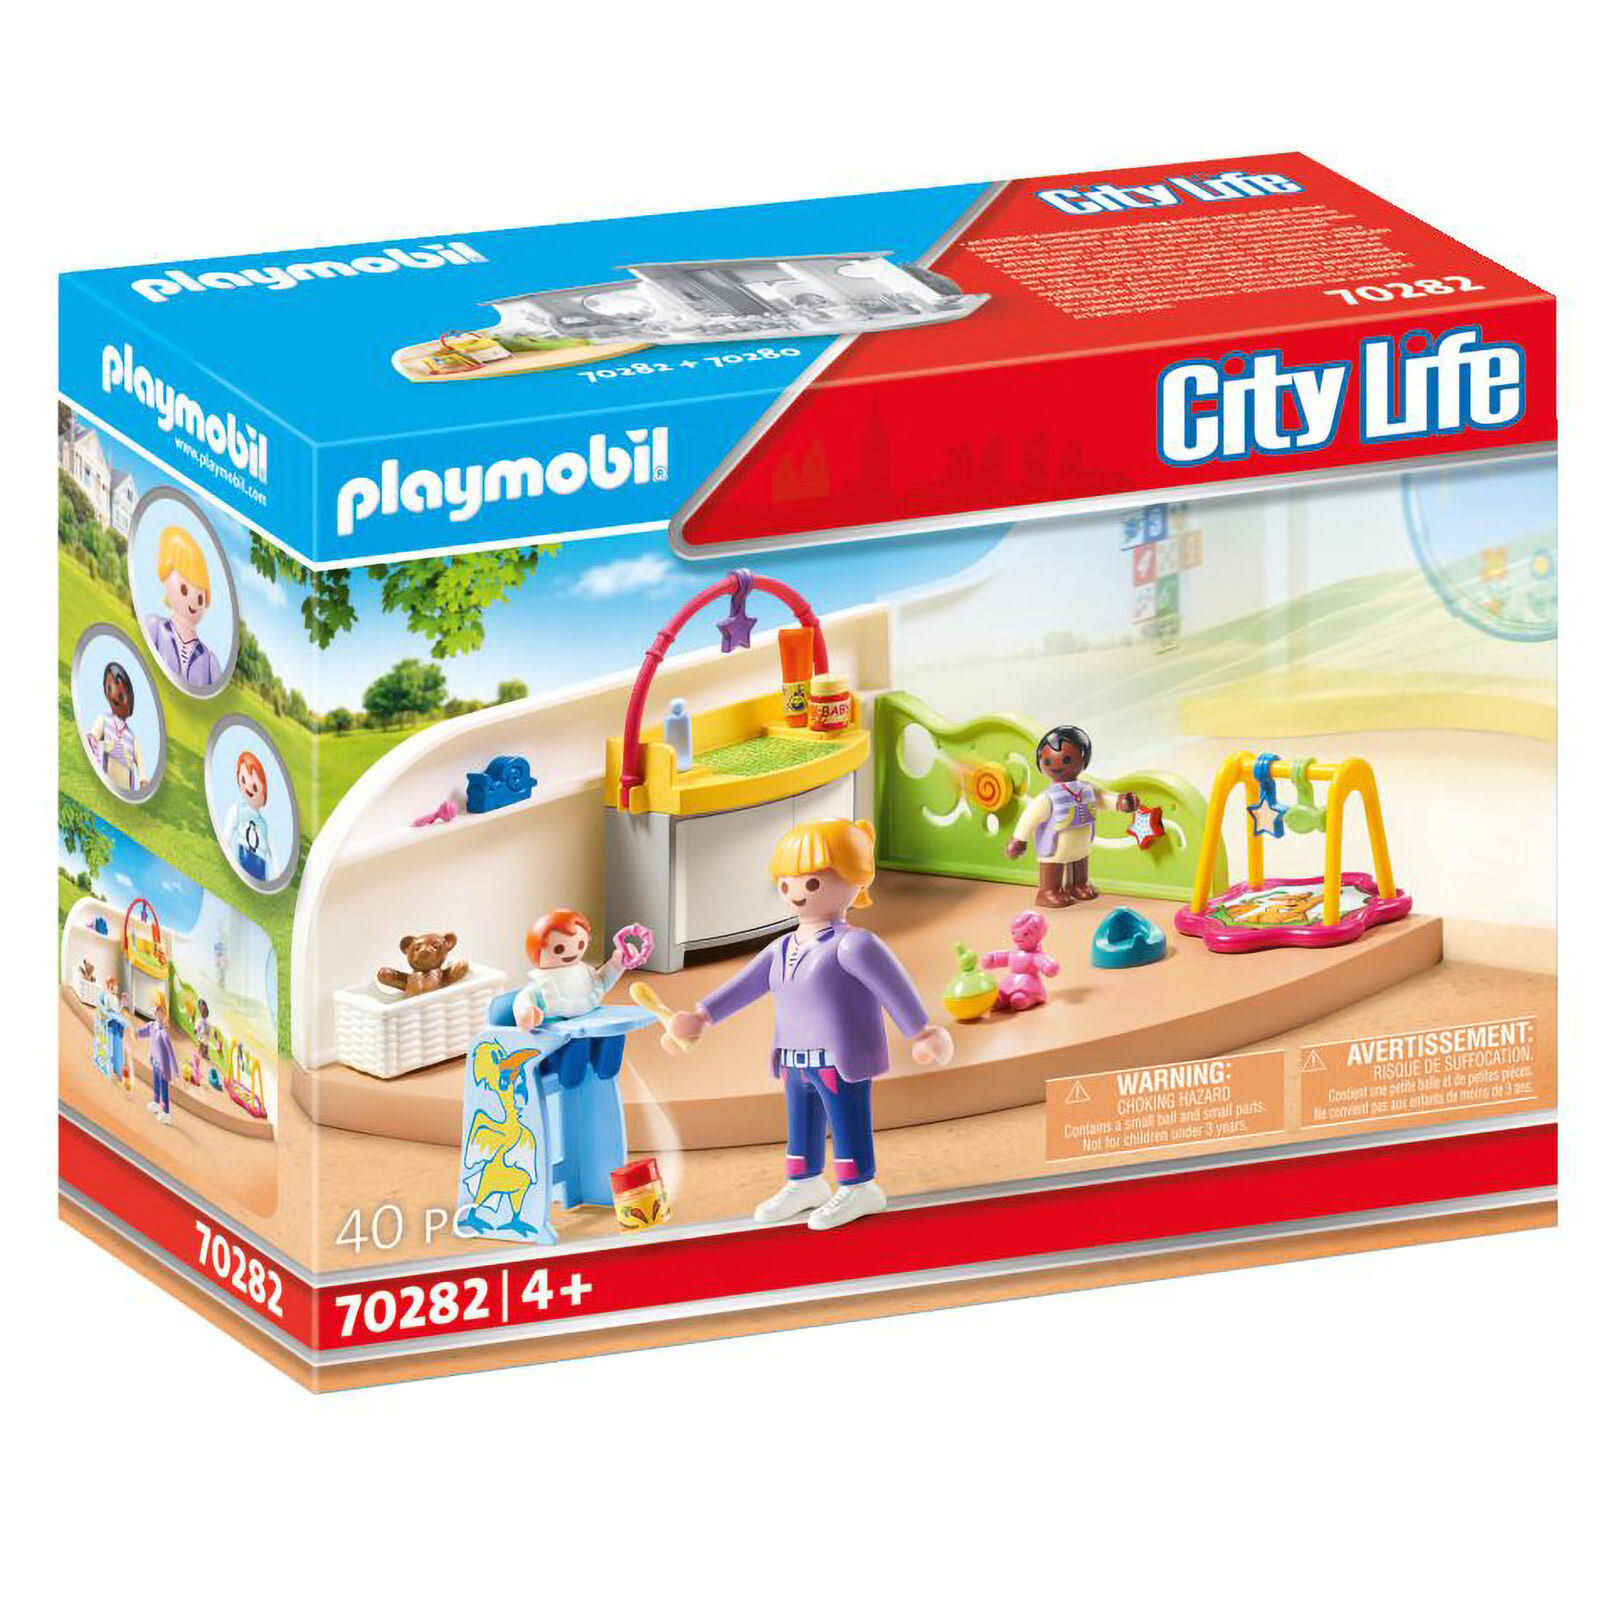 Playmobil 70282 City Life Toddler Room